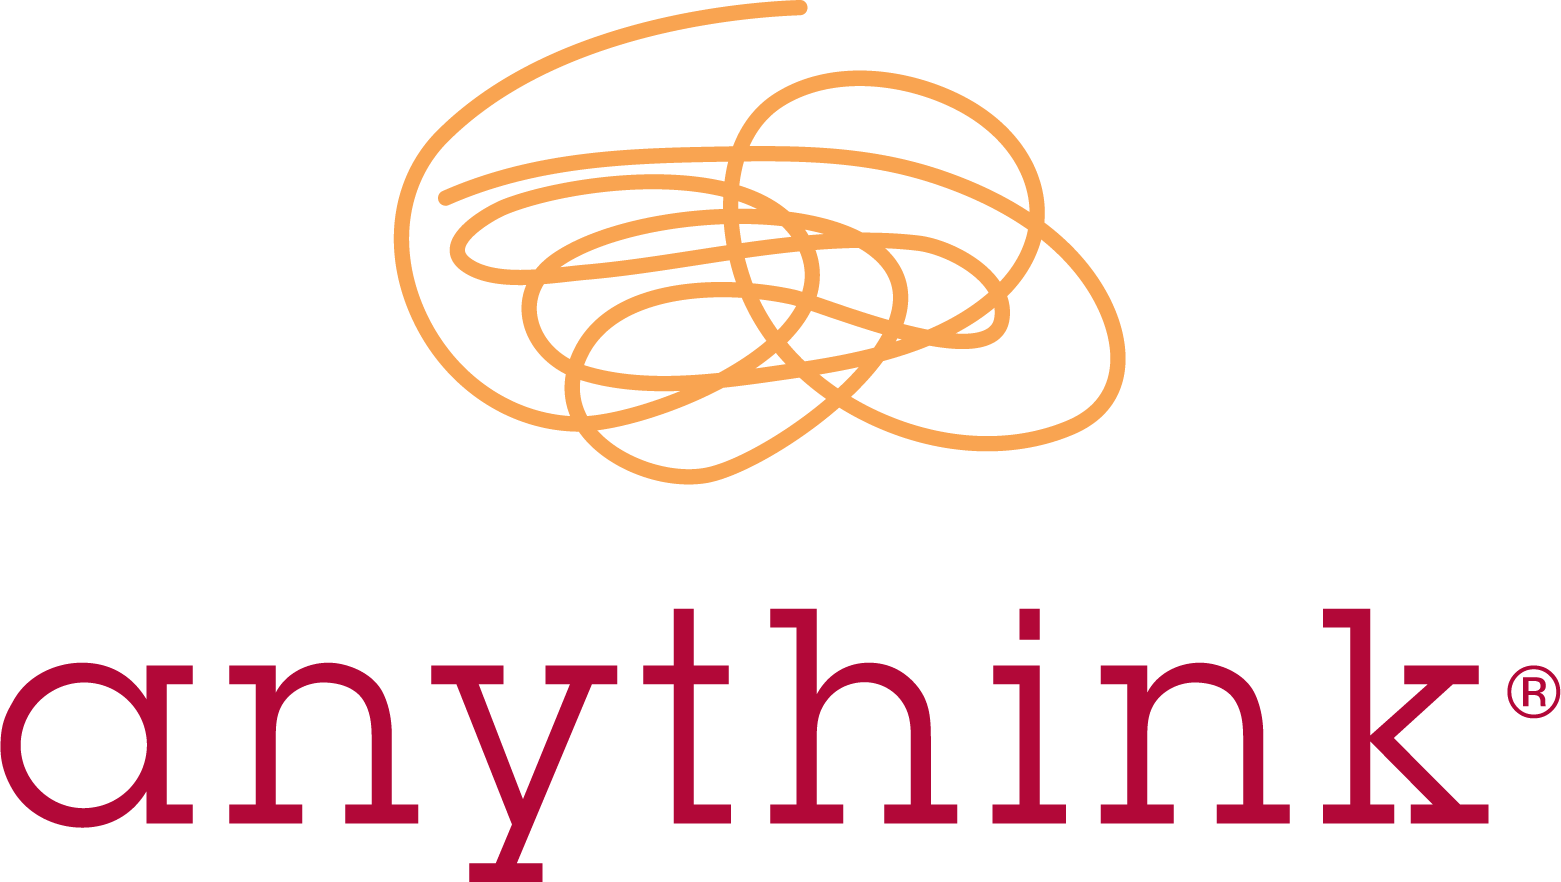 Anythink logo